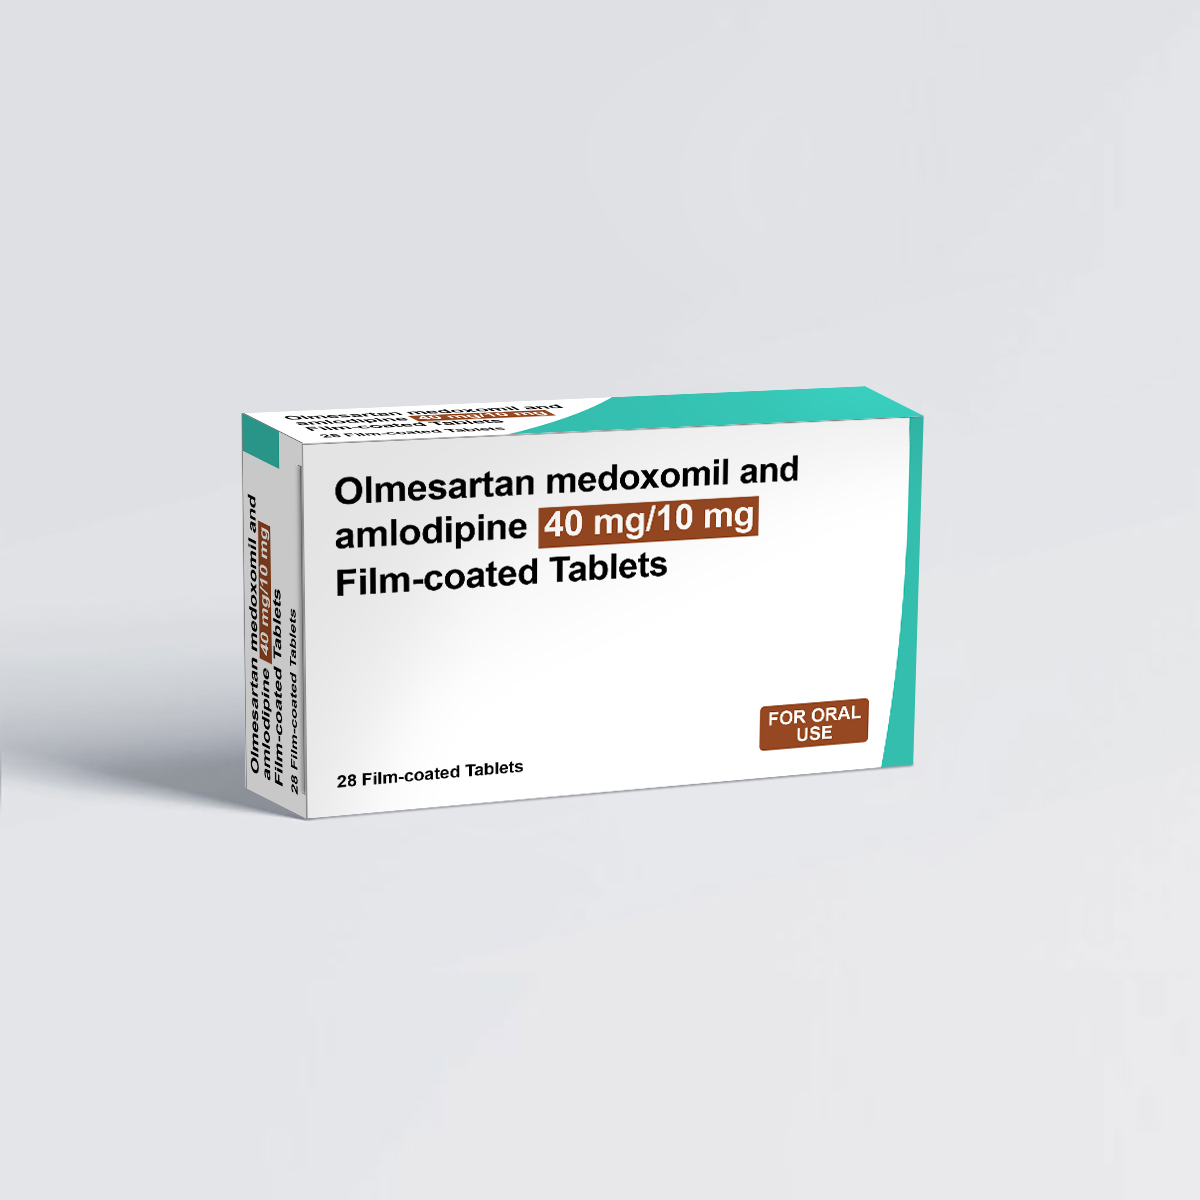 Presentation_Olmesartan medoxomil and amlodipine 40 mg-10 mg